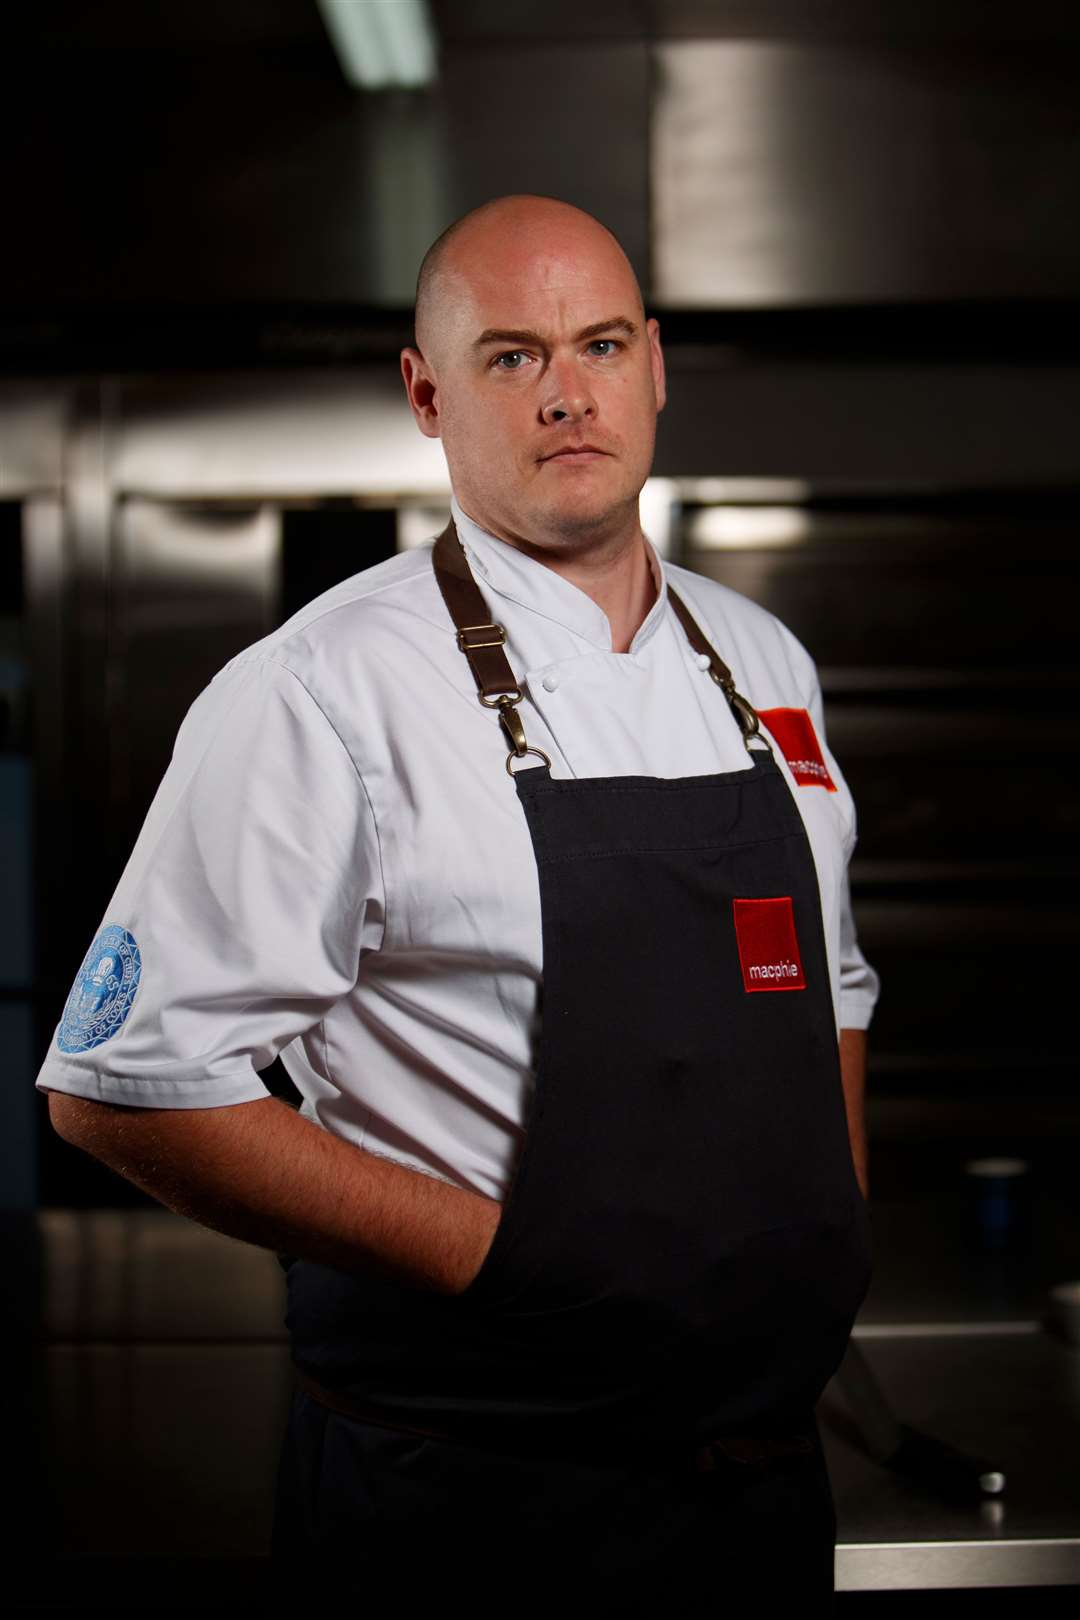 Head chef Gordon Downie